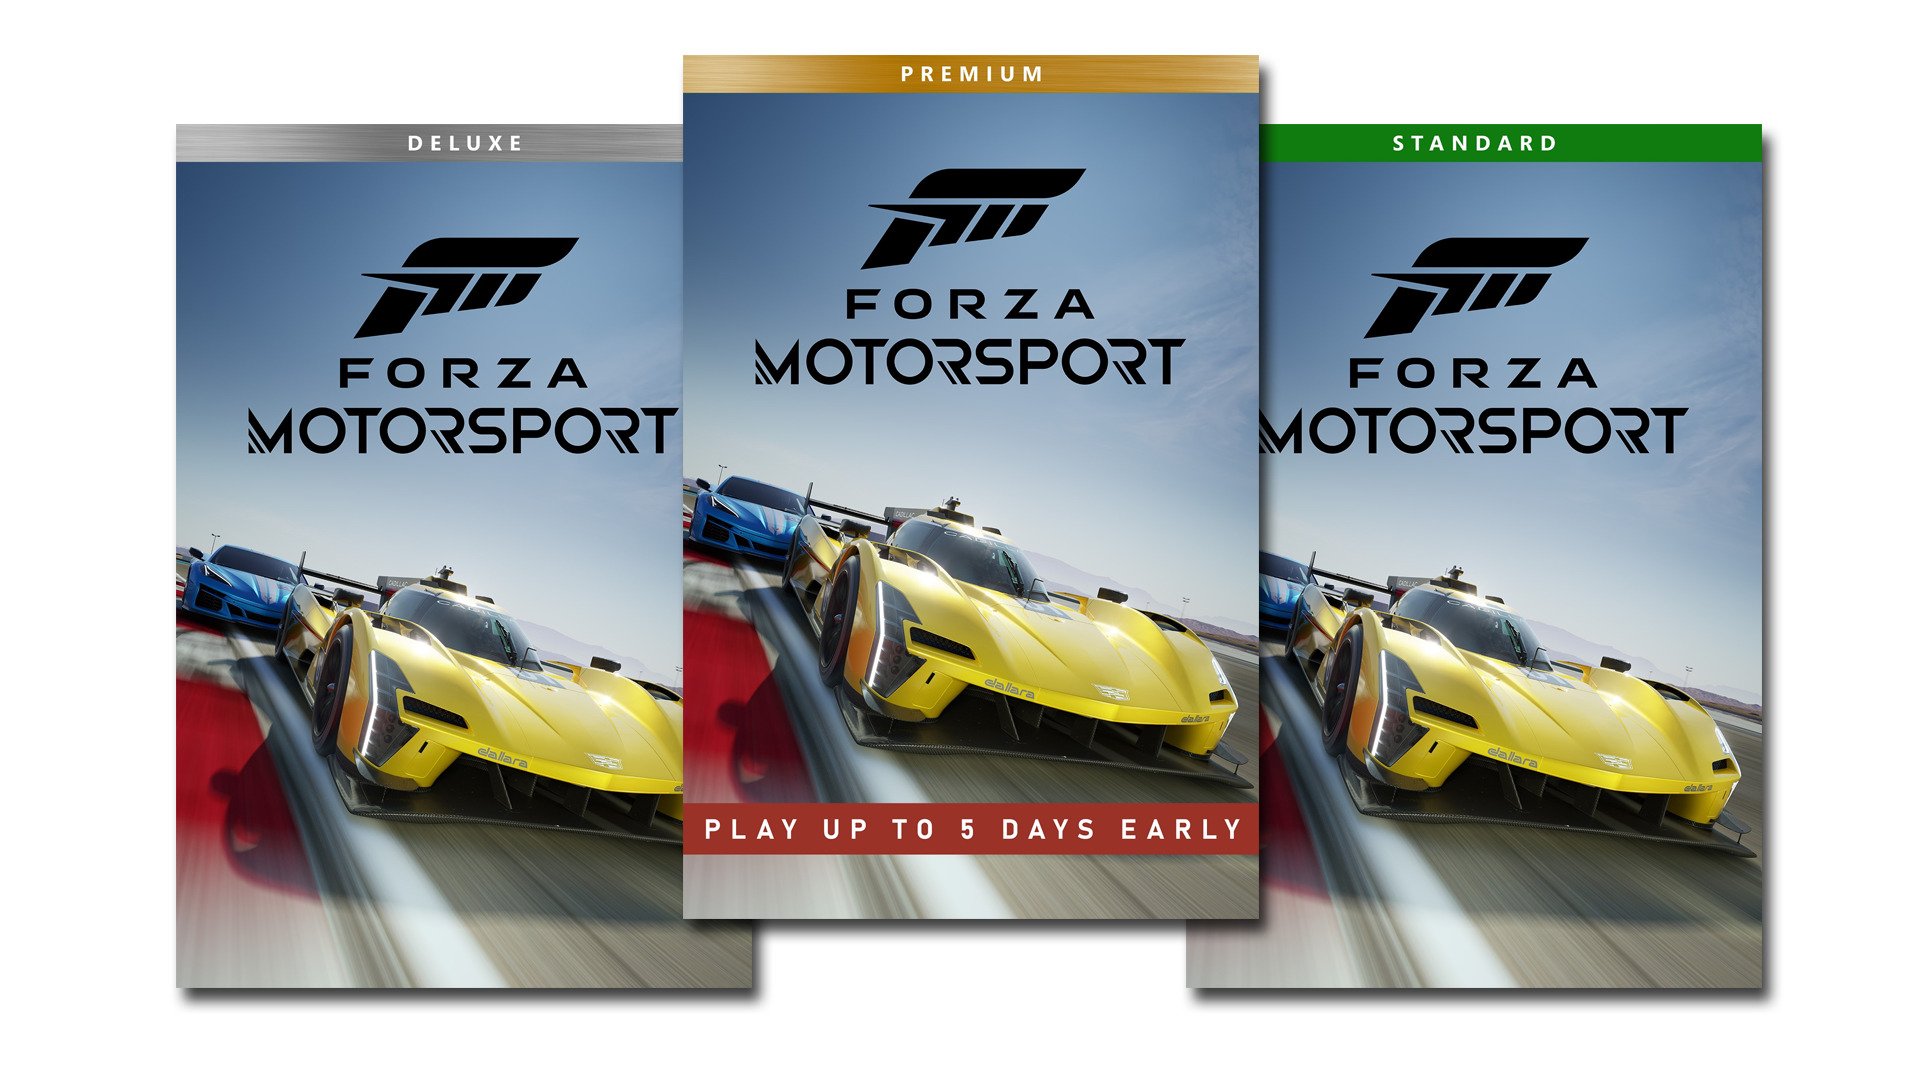 Play Forza Horizon 5 Standard Edition